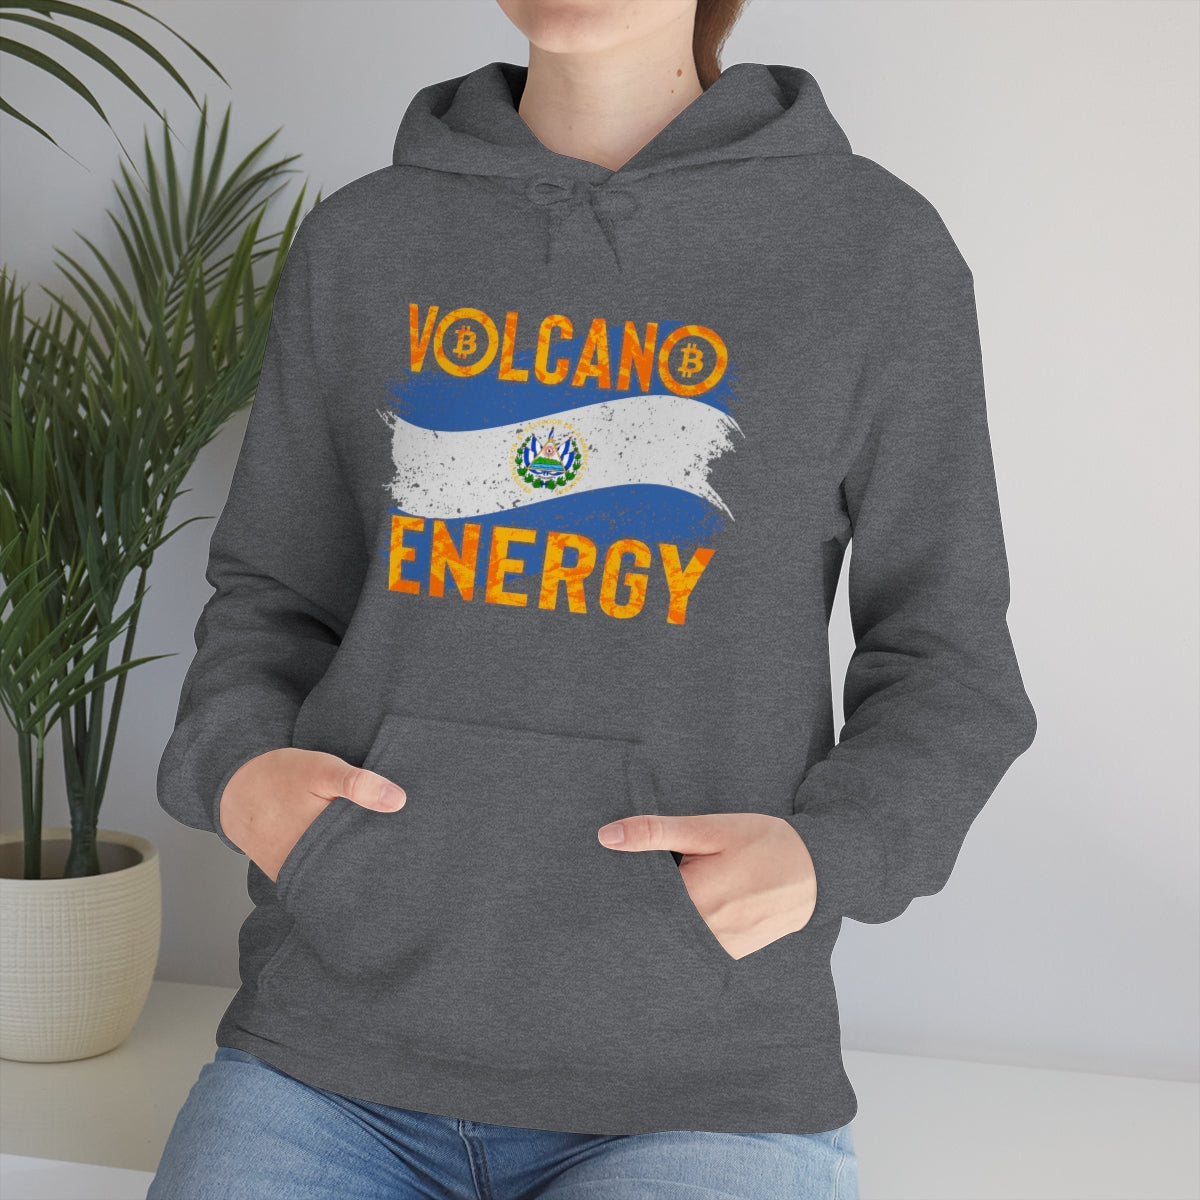 Volcano Energy 2.0 Hoodie